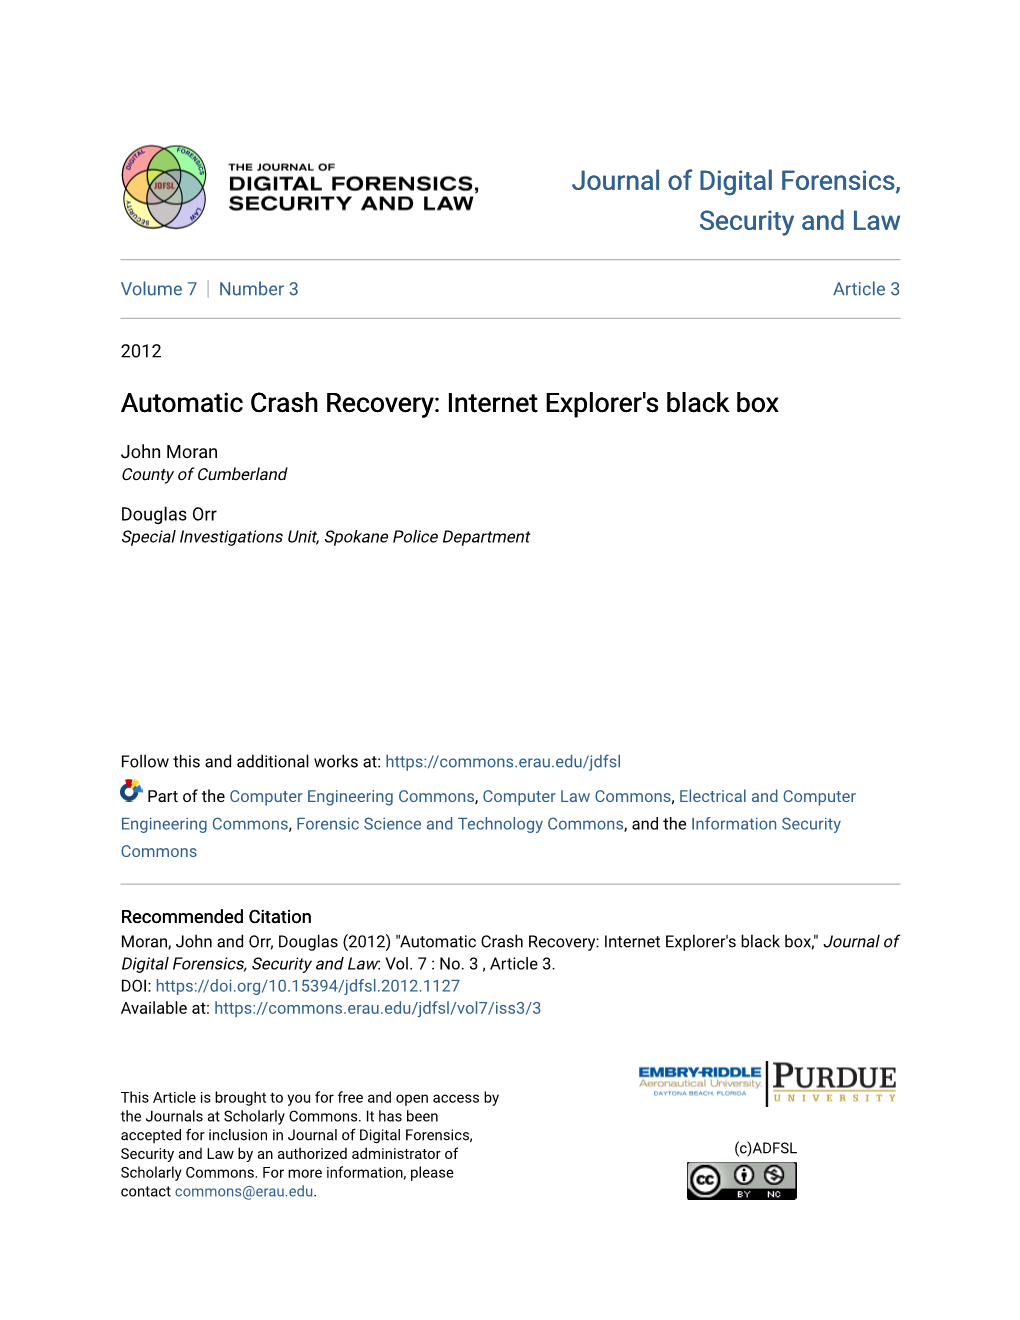 Automatic Crash Recovery: Internet Explorer's Black Box